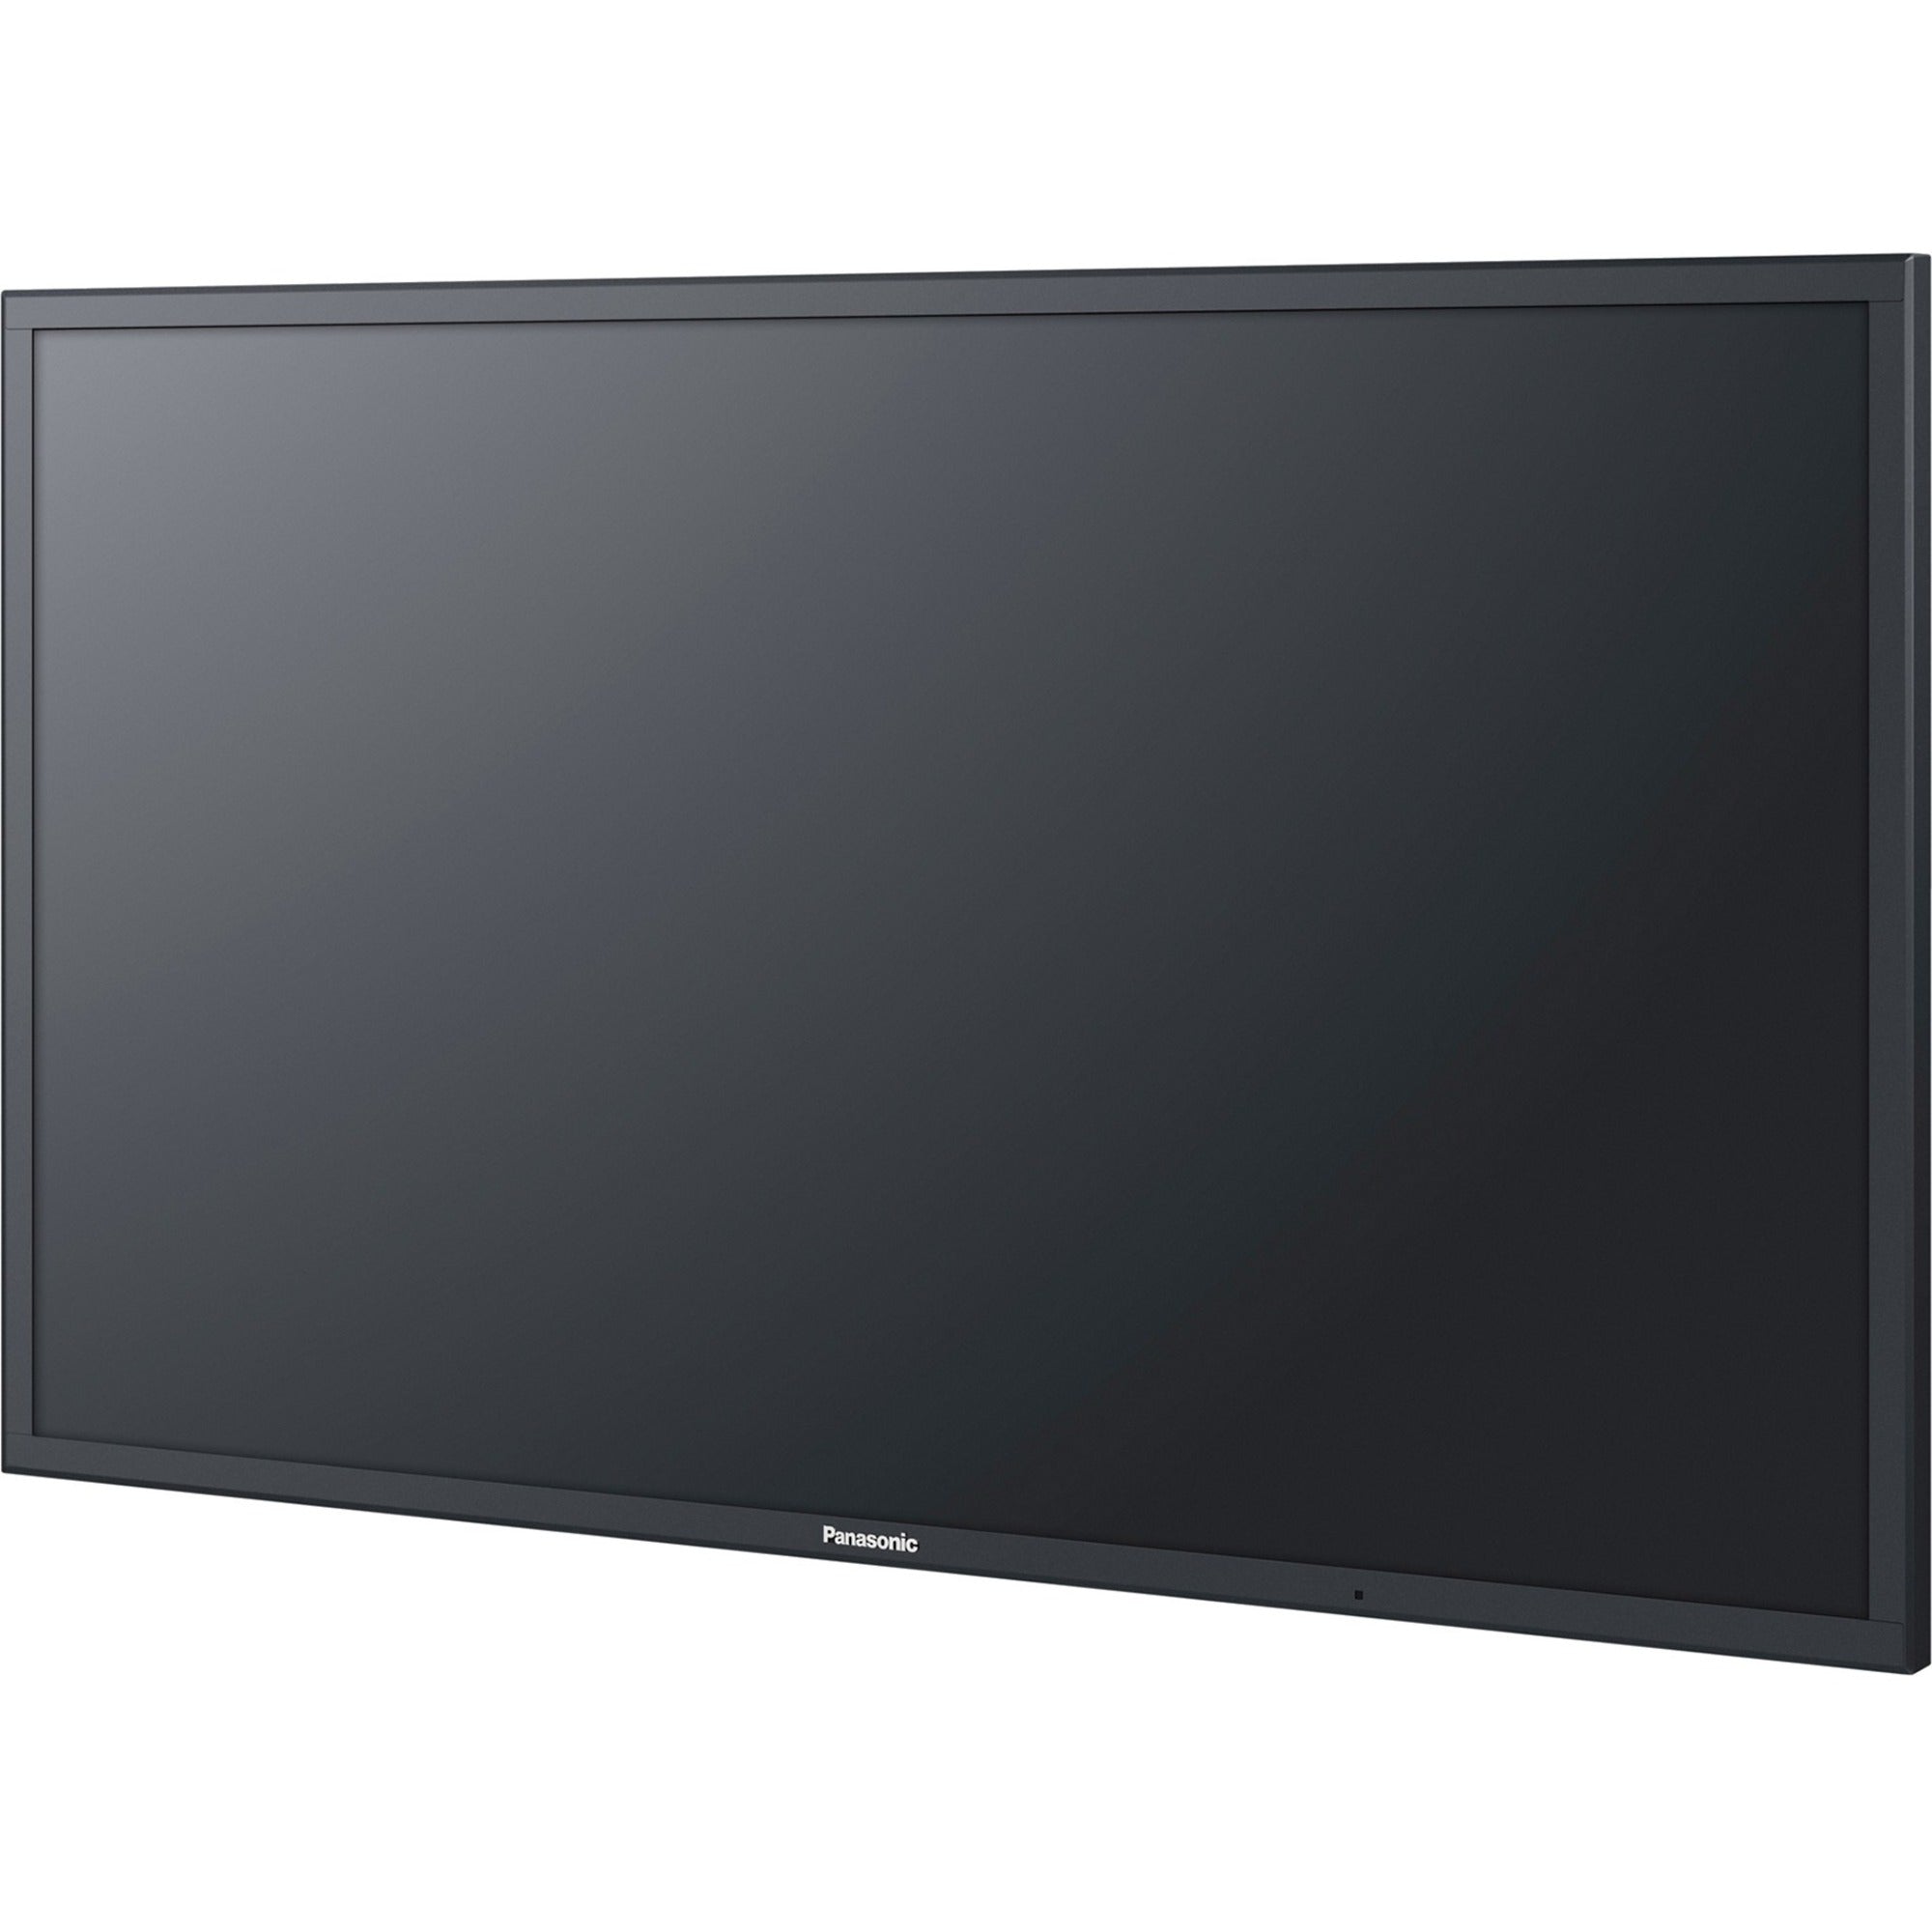 Panasonic 80-inch Class Multi Touch Screen LED Display TH-80LFB70U - TH80LFB70U